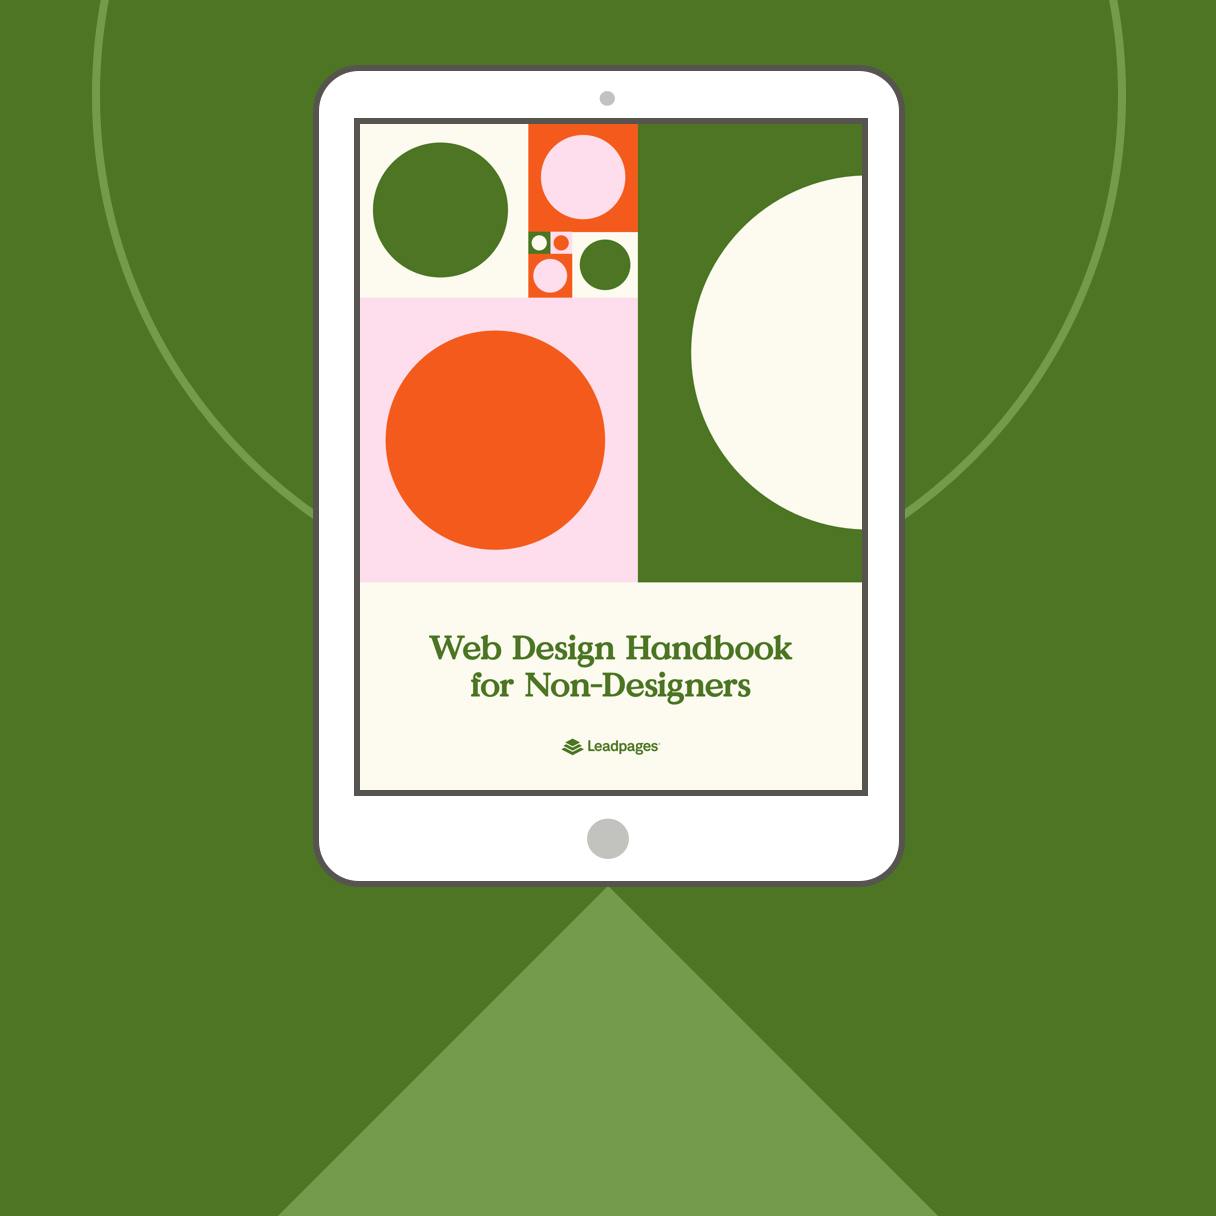 The Web Design Handbook for Non-Designers